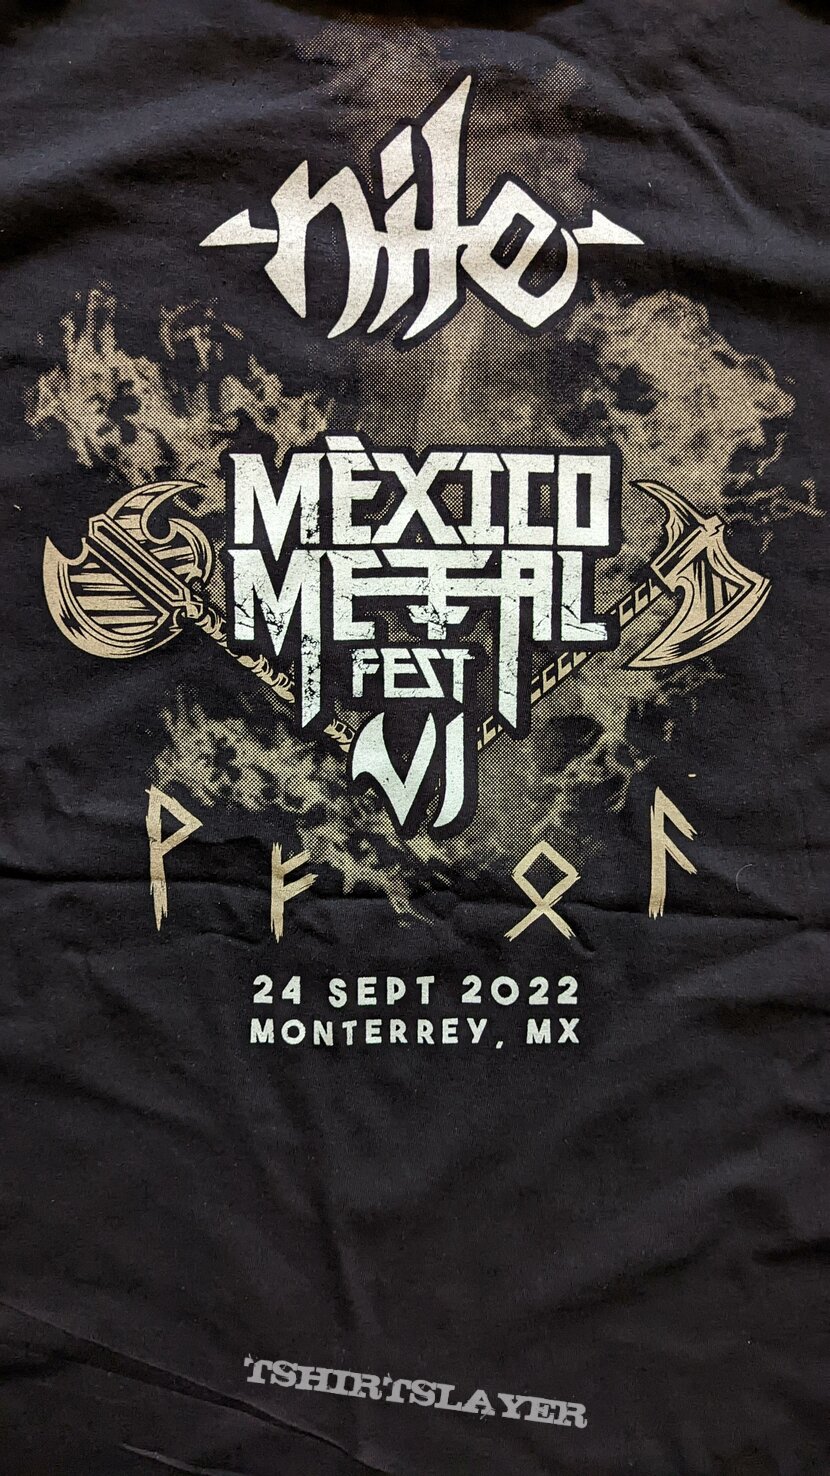 Nile  - Mexico Metal Fest VI official event shirt